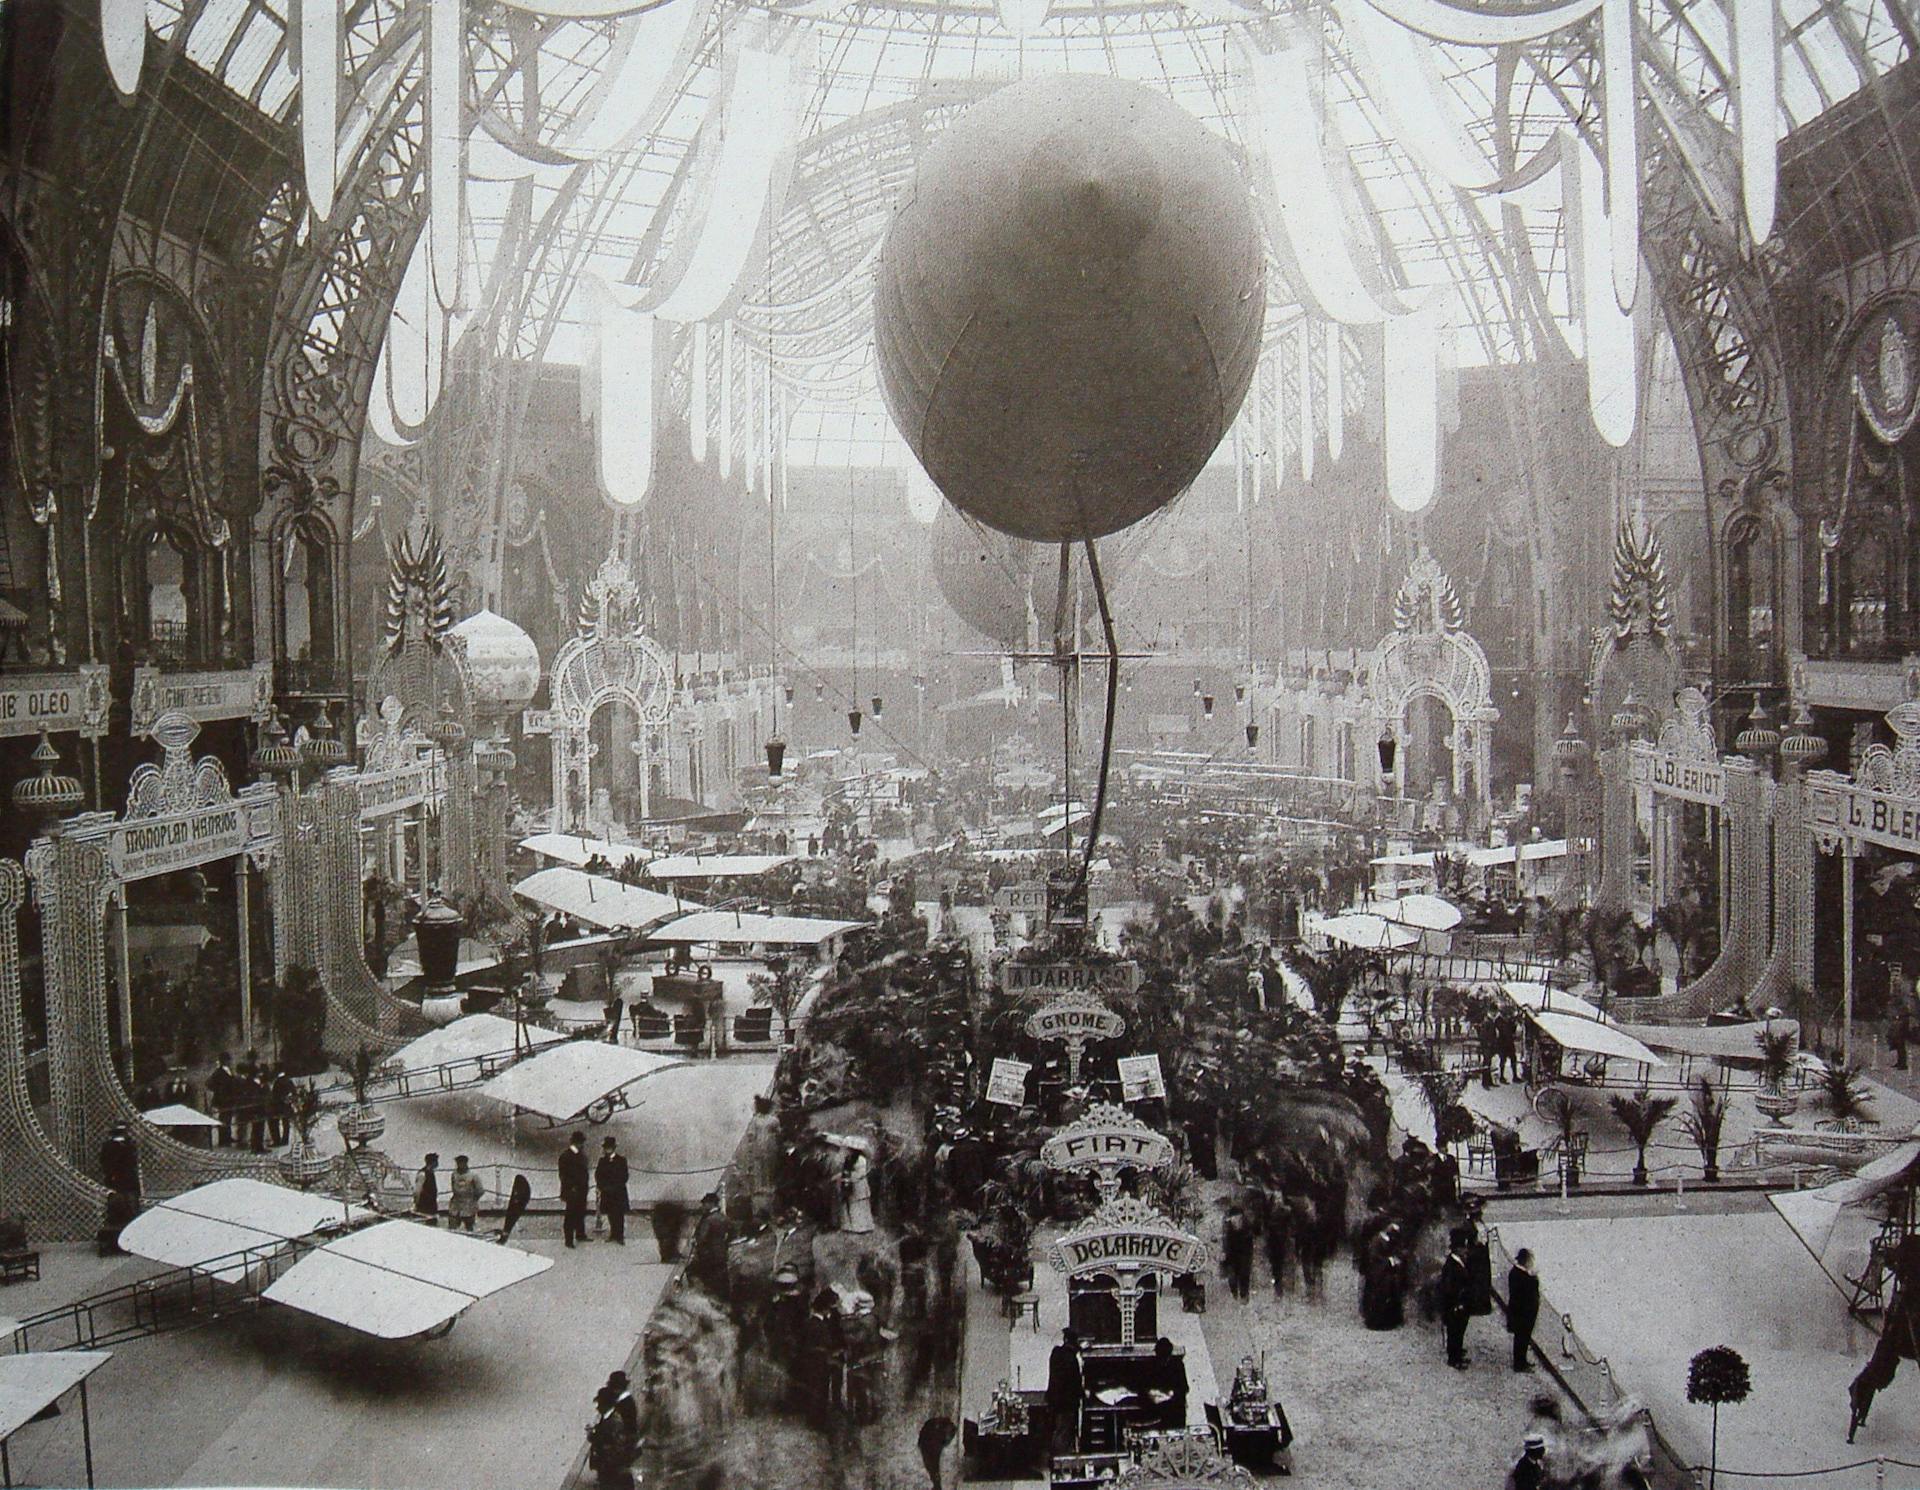 Salon de locomotion aerienne, 1909 Grand Palais Parijs. Fotograaf onbekend - Science & Vie, 2009.  